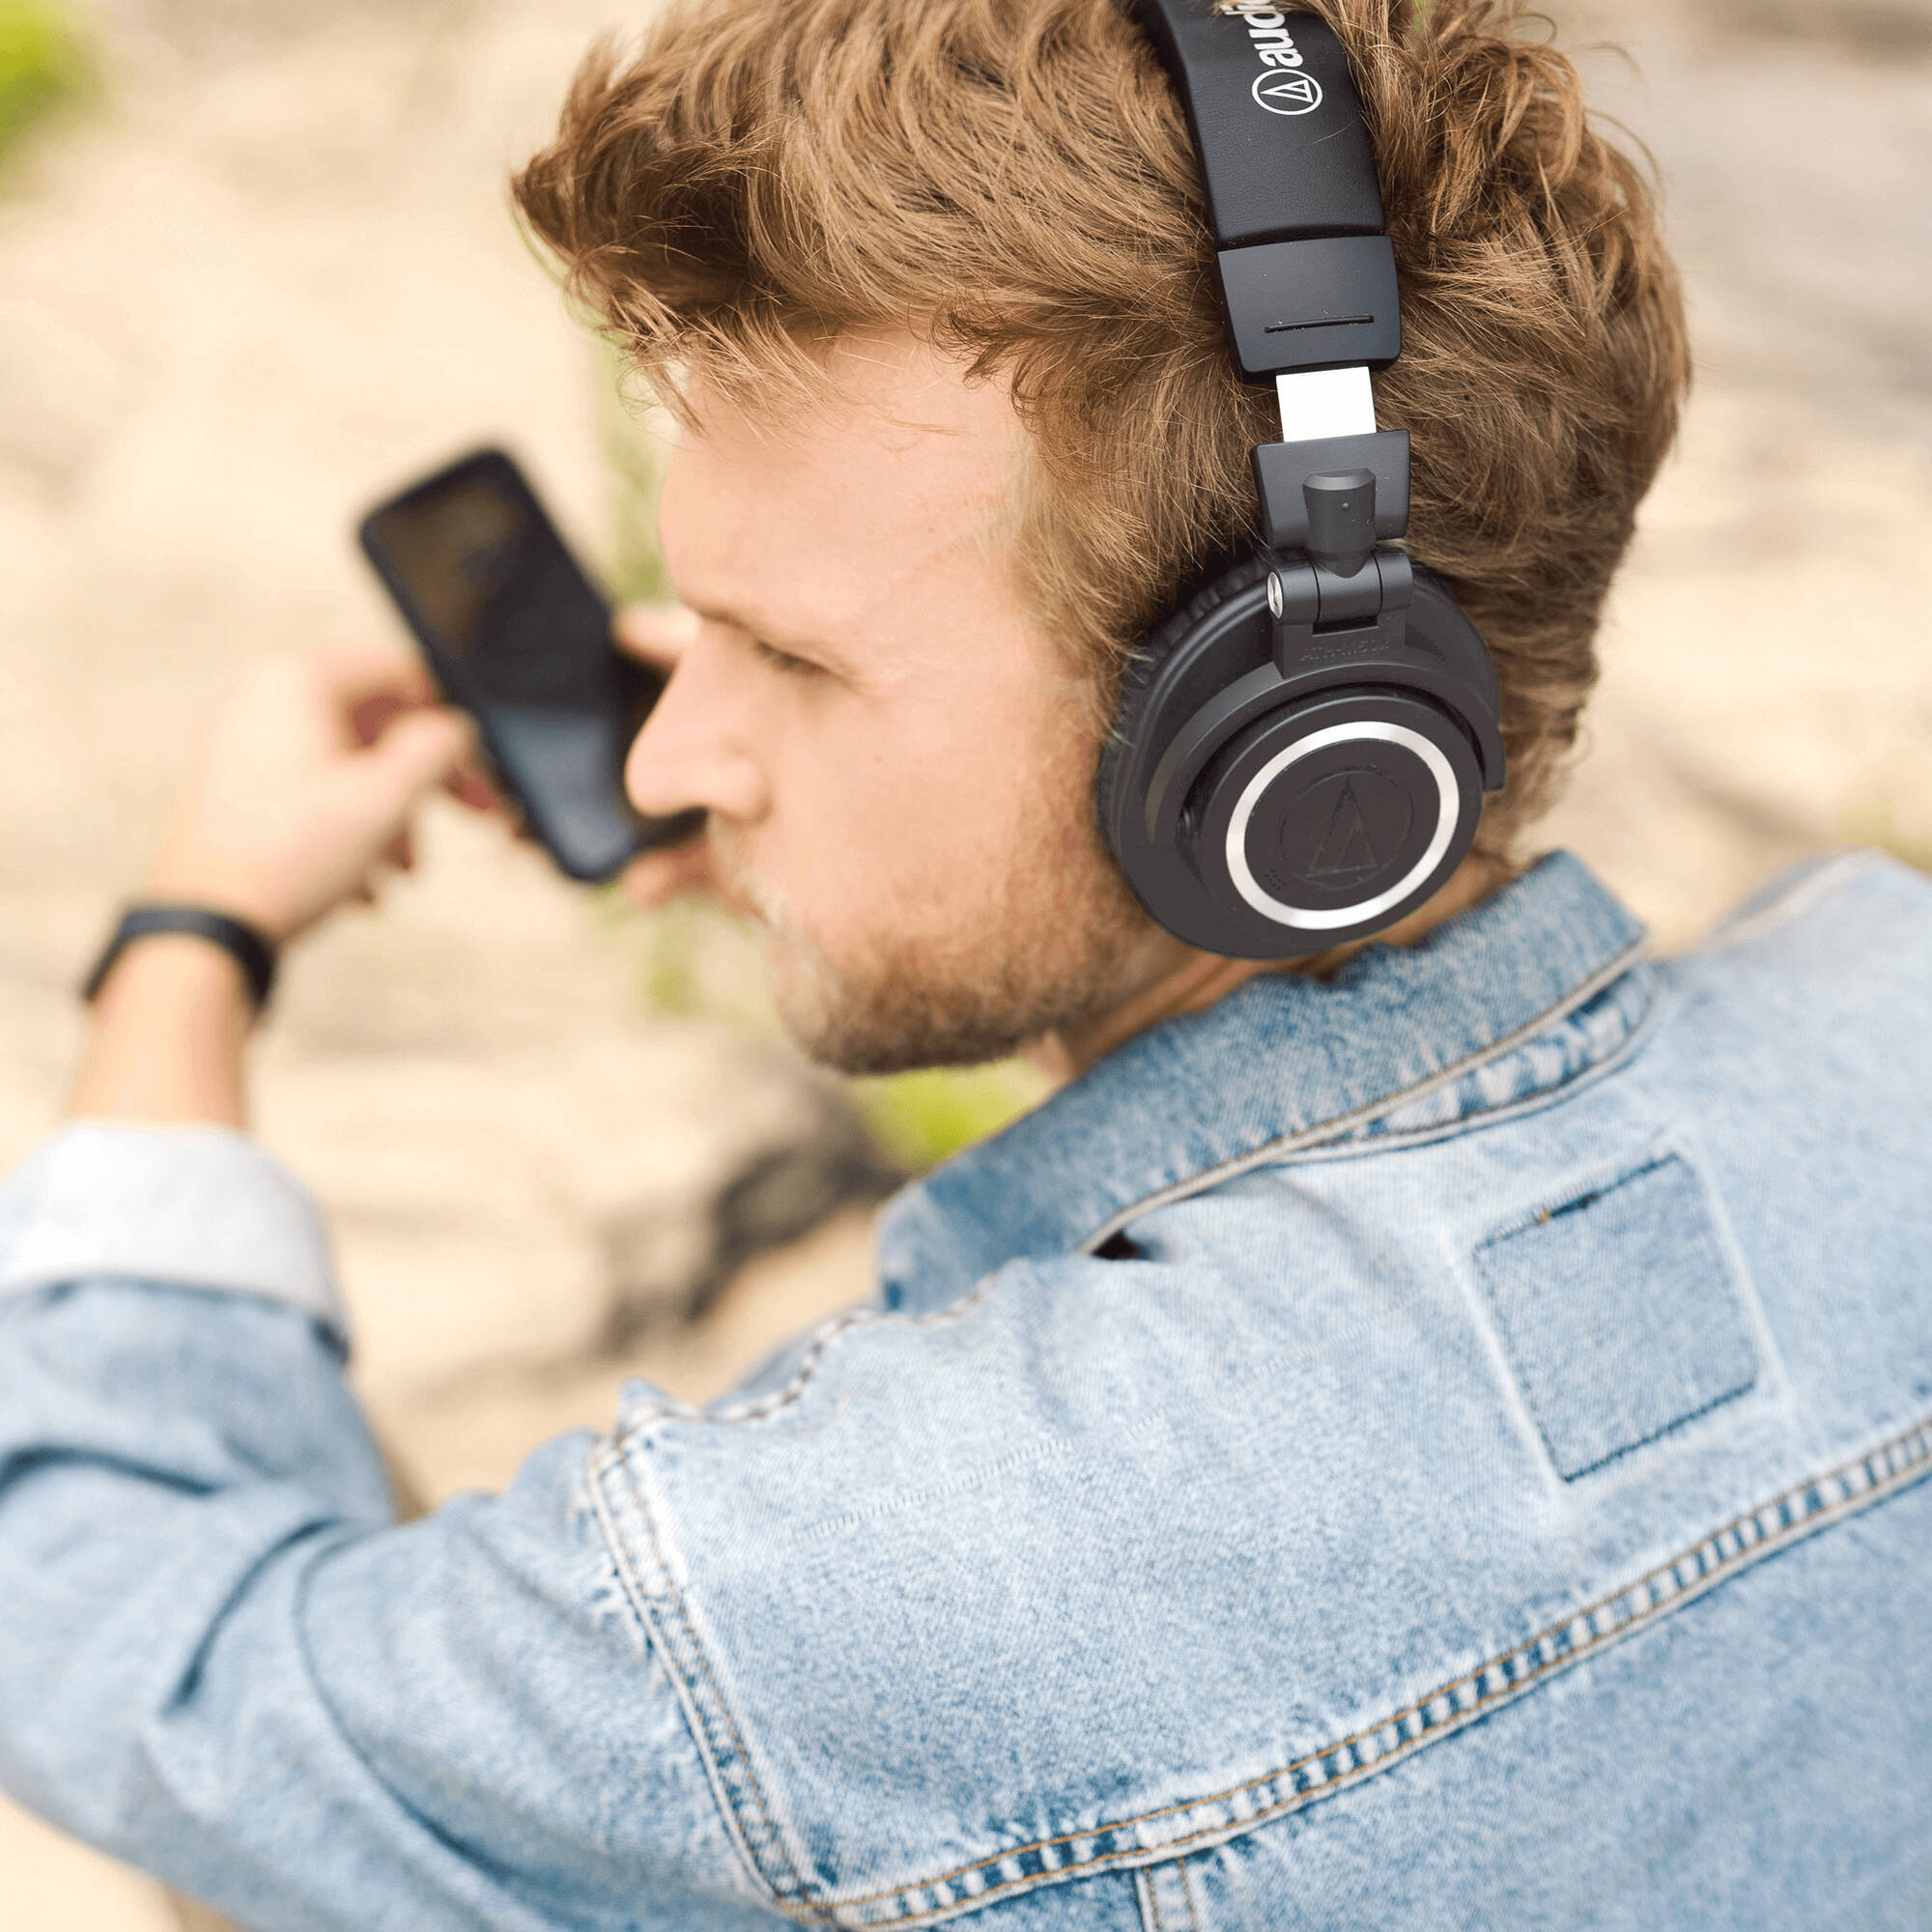 Audio Technica ATH-M50XBT2 wireless Over-Ear Headphones